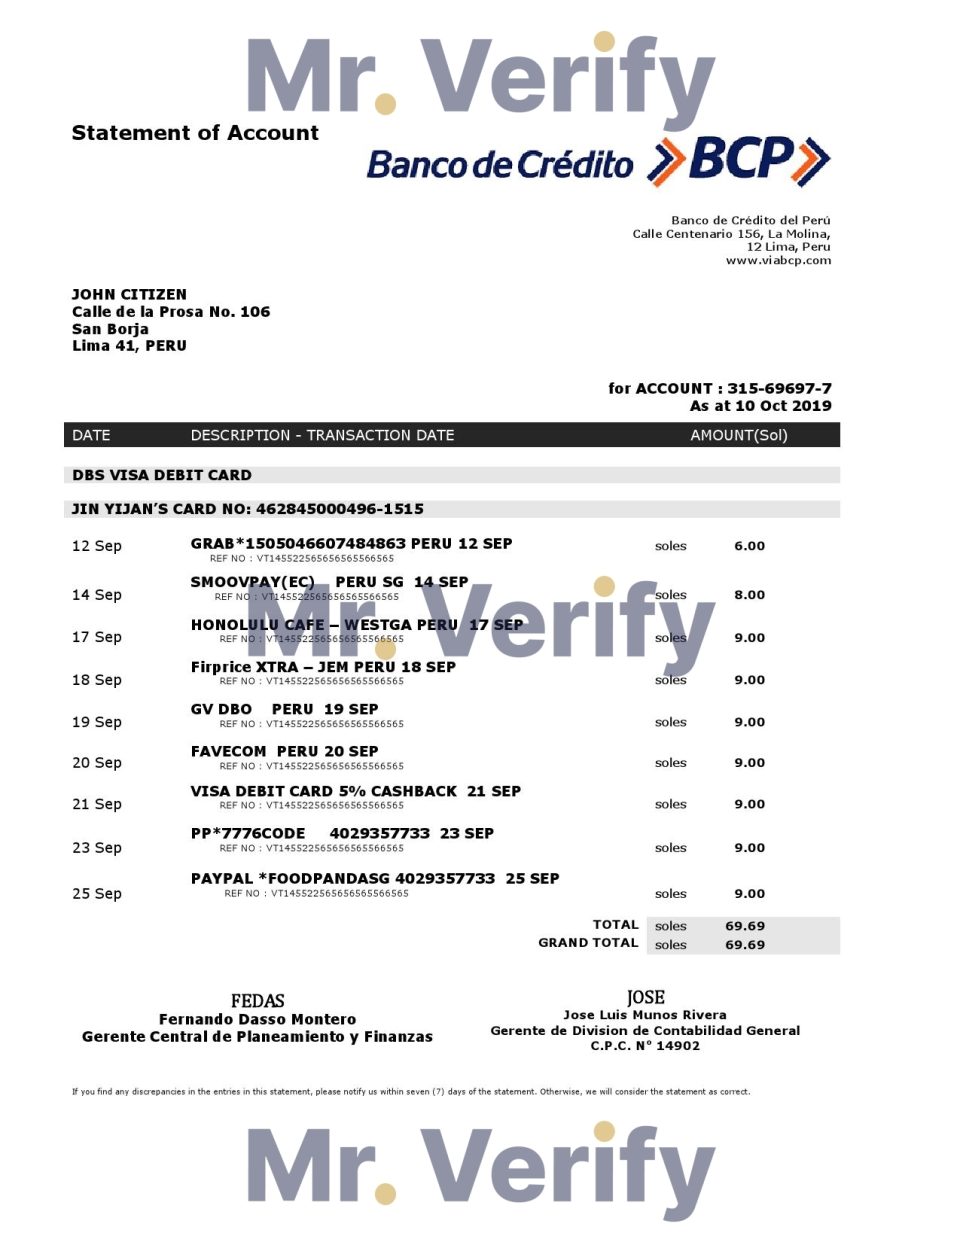 Peru Banco de Credito del Peru (BCP) proof of address bank statement template in Word and PDF format